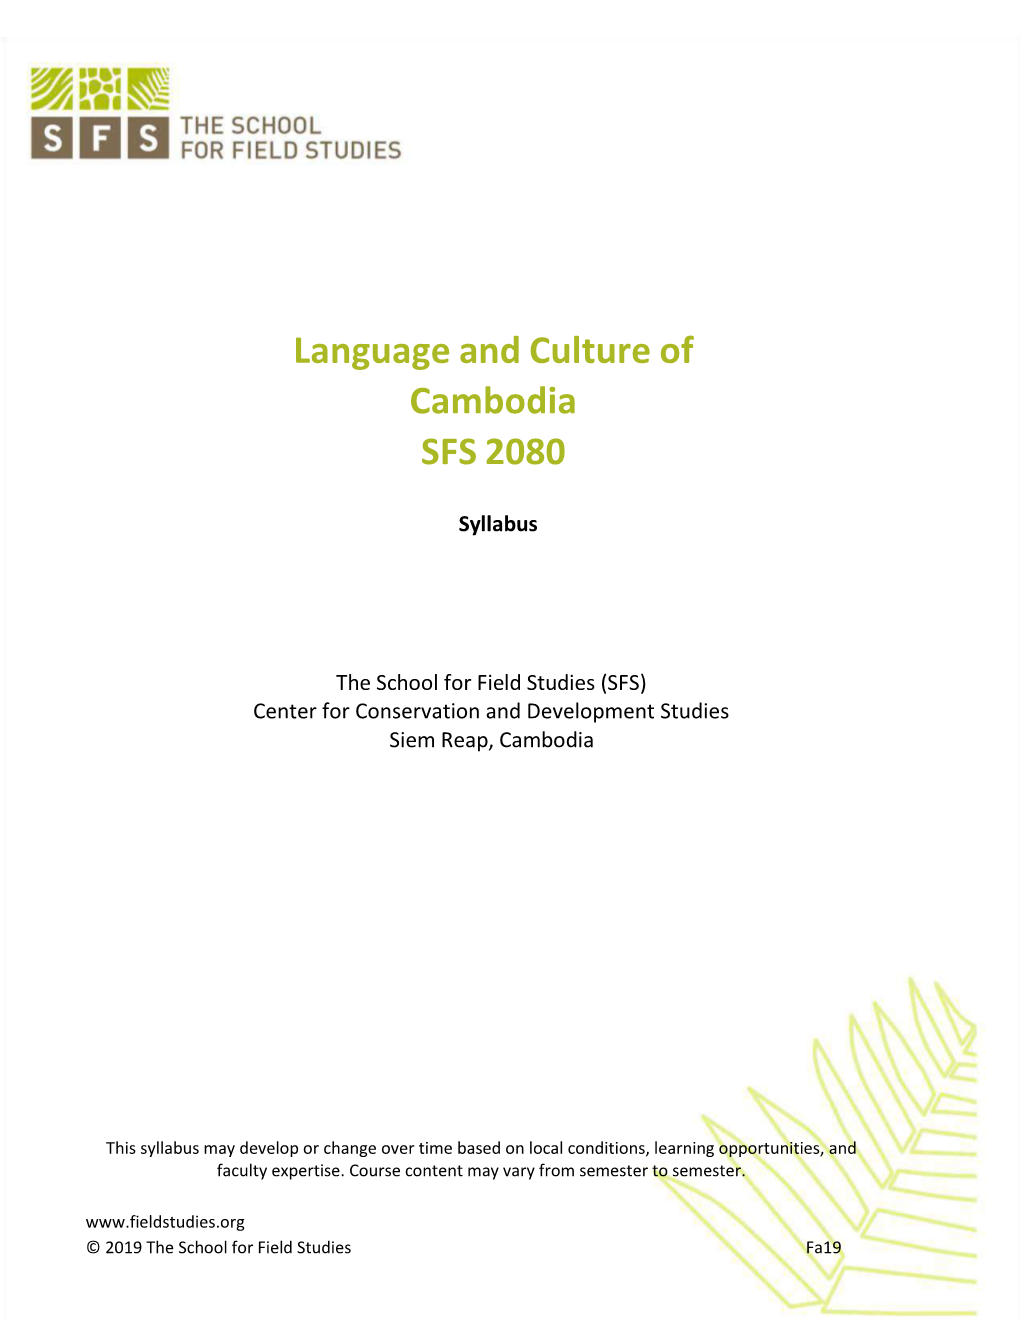 Language and Culture of Cambodia SFS 2080